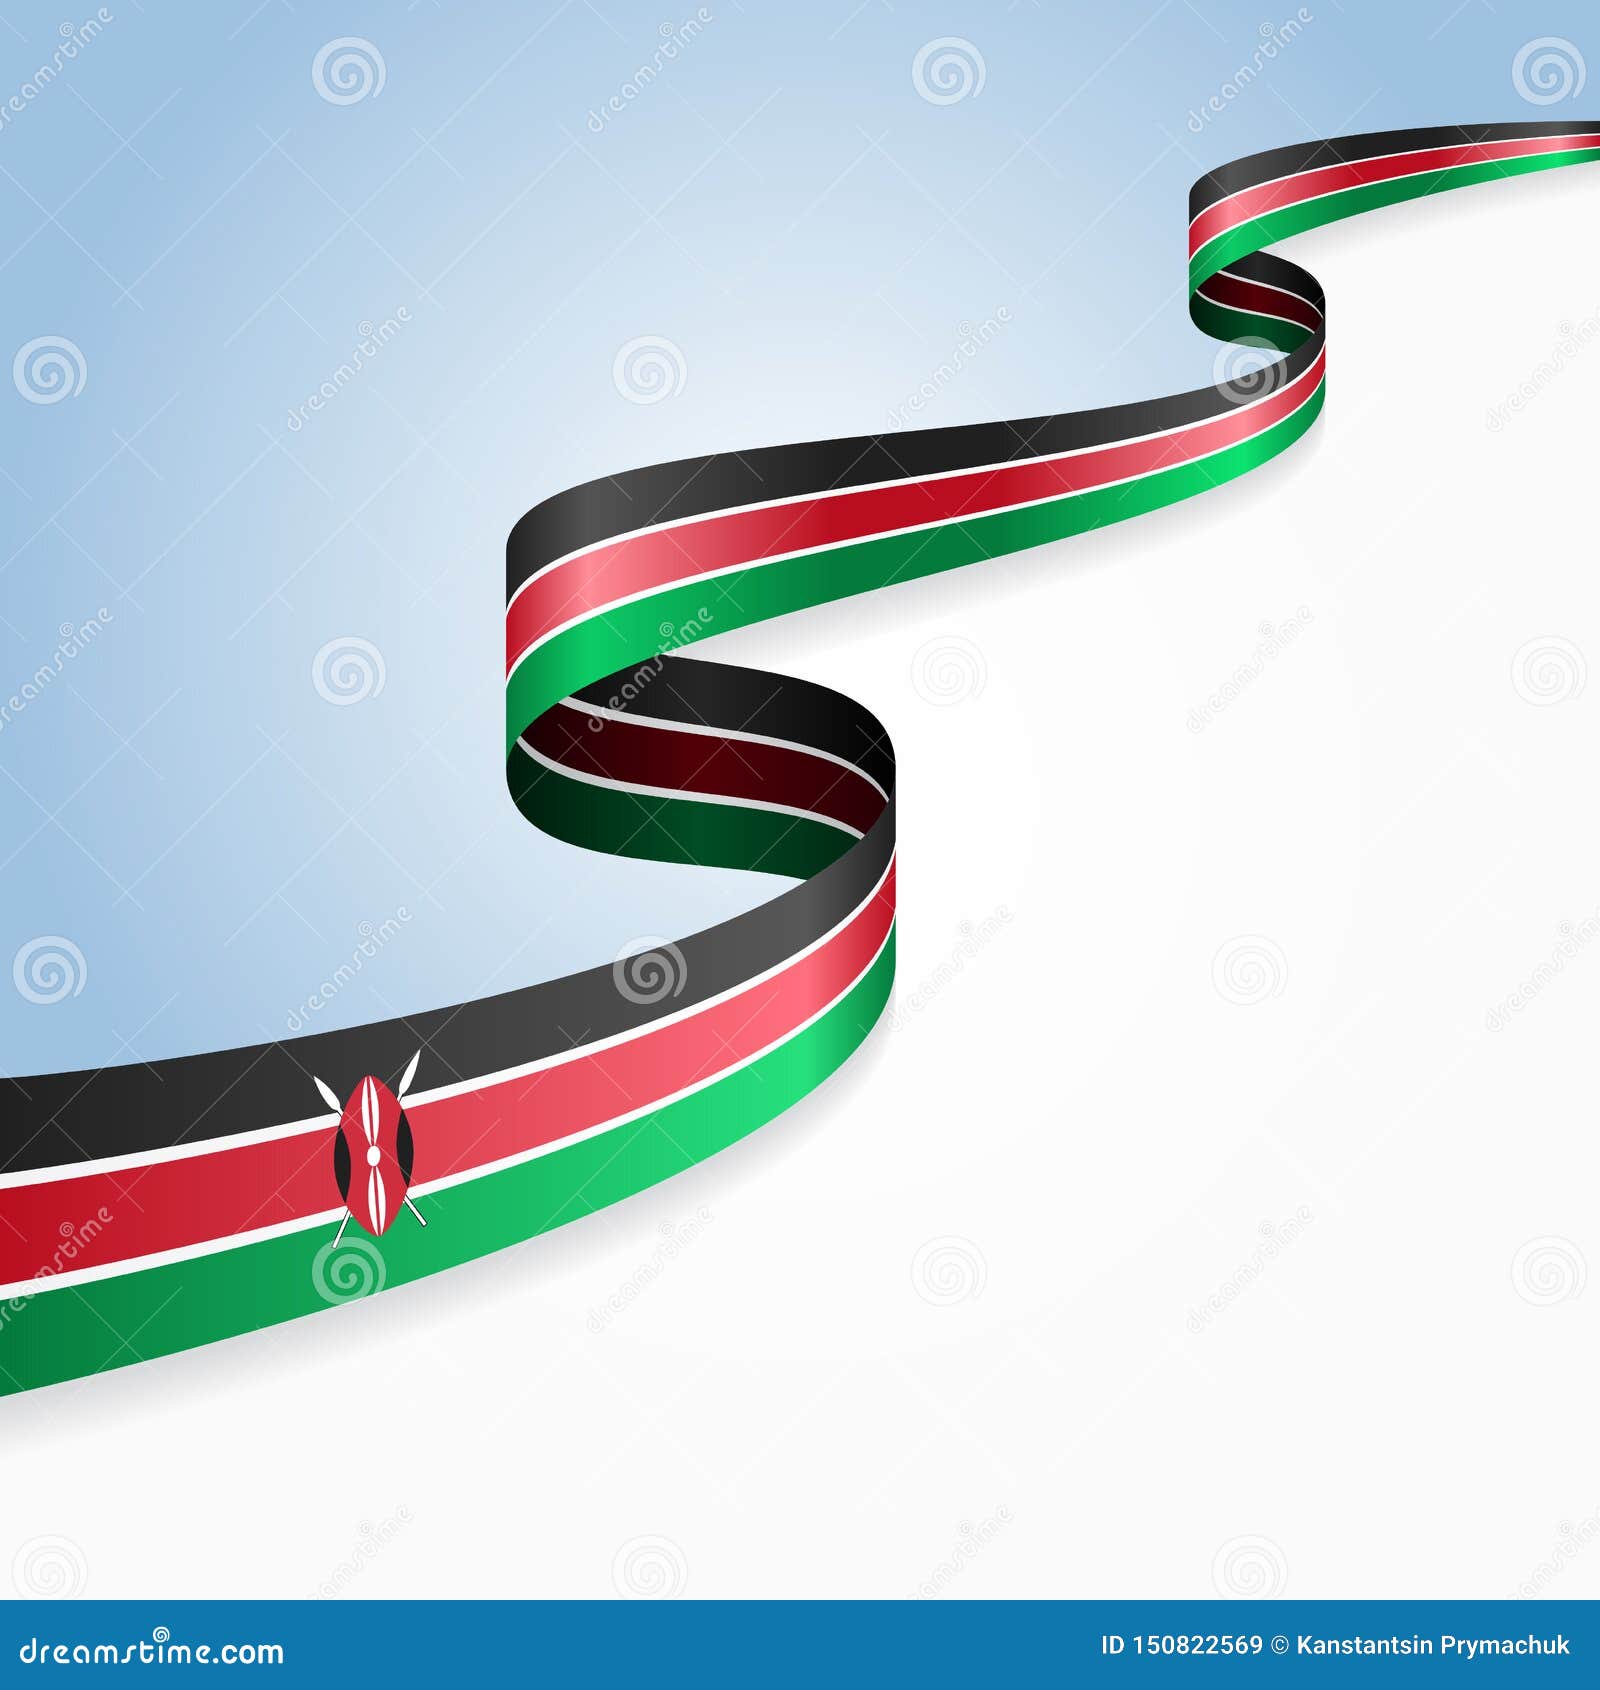 kenyan flag wavy abstract background.  .